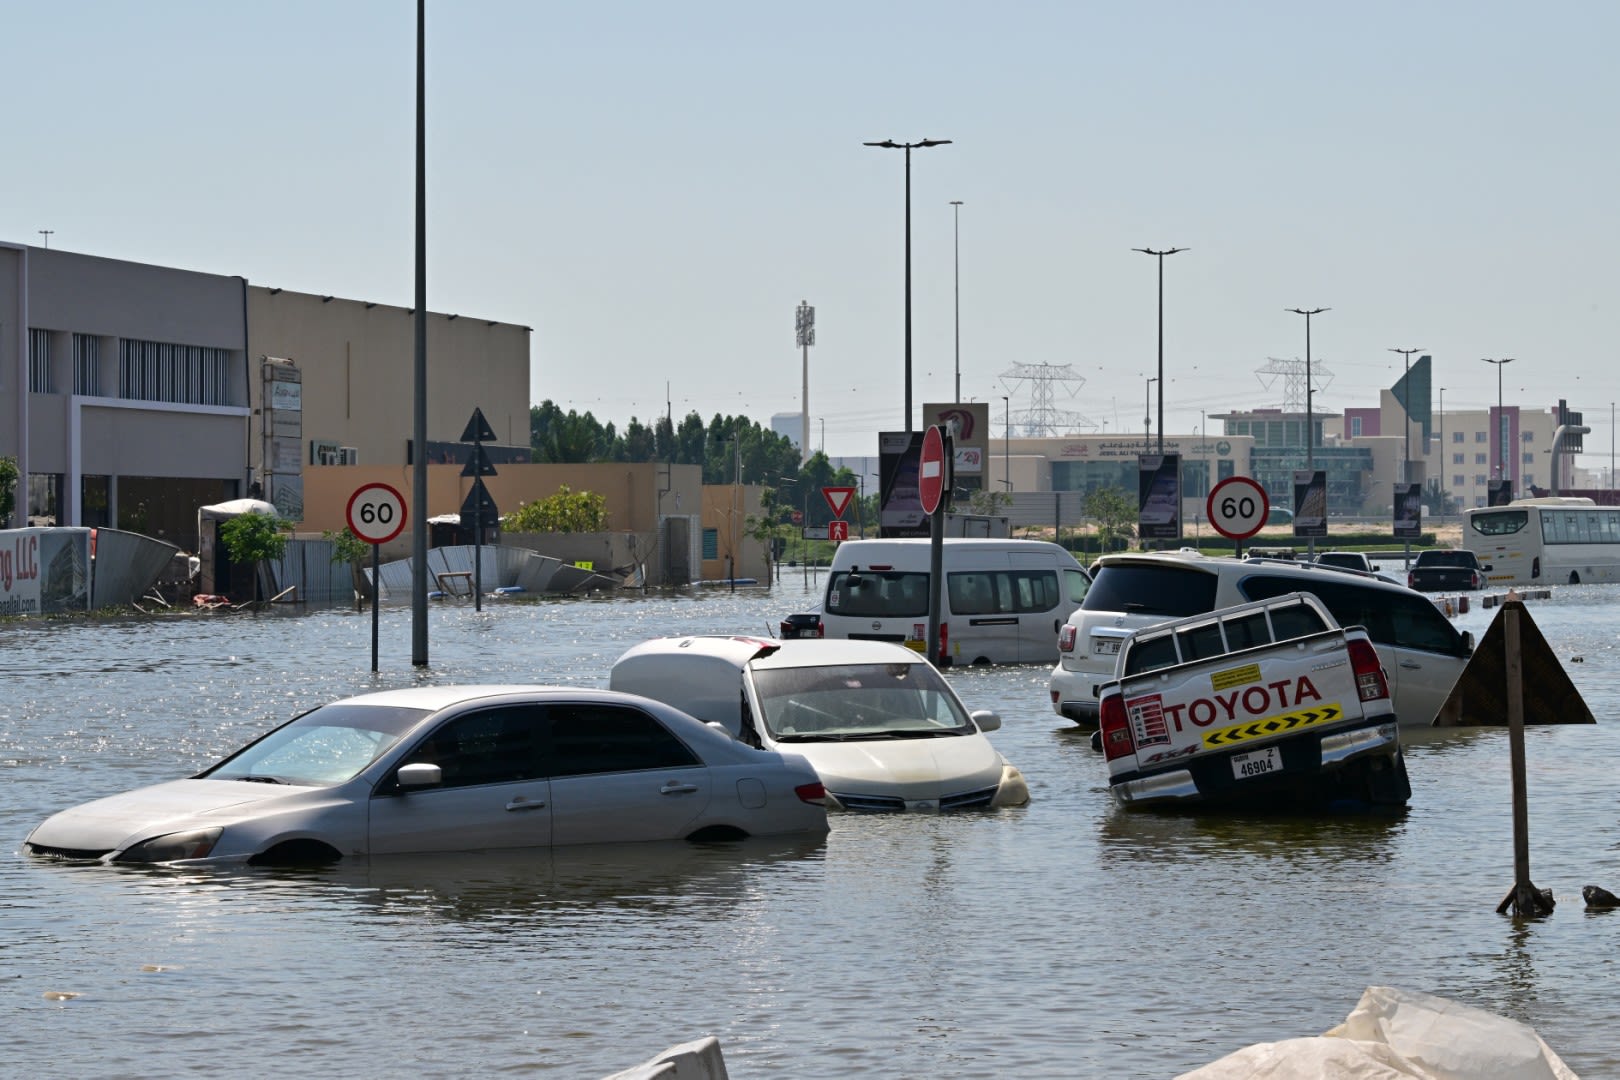 Cloud seeding did not cause Dubai floods: scientists